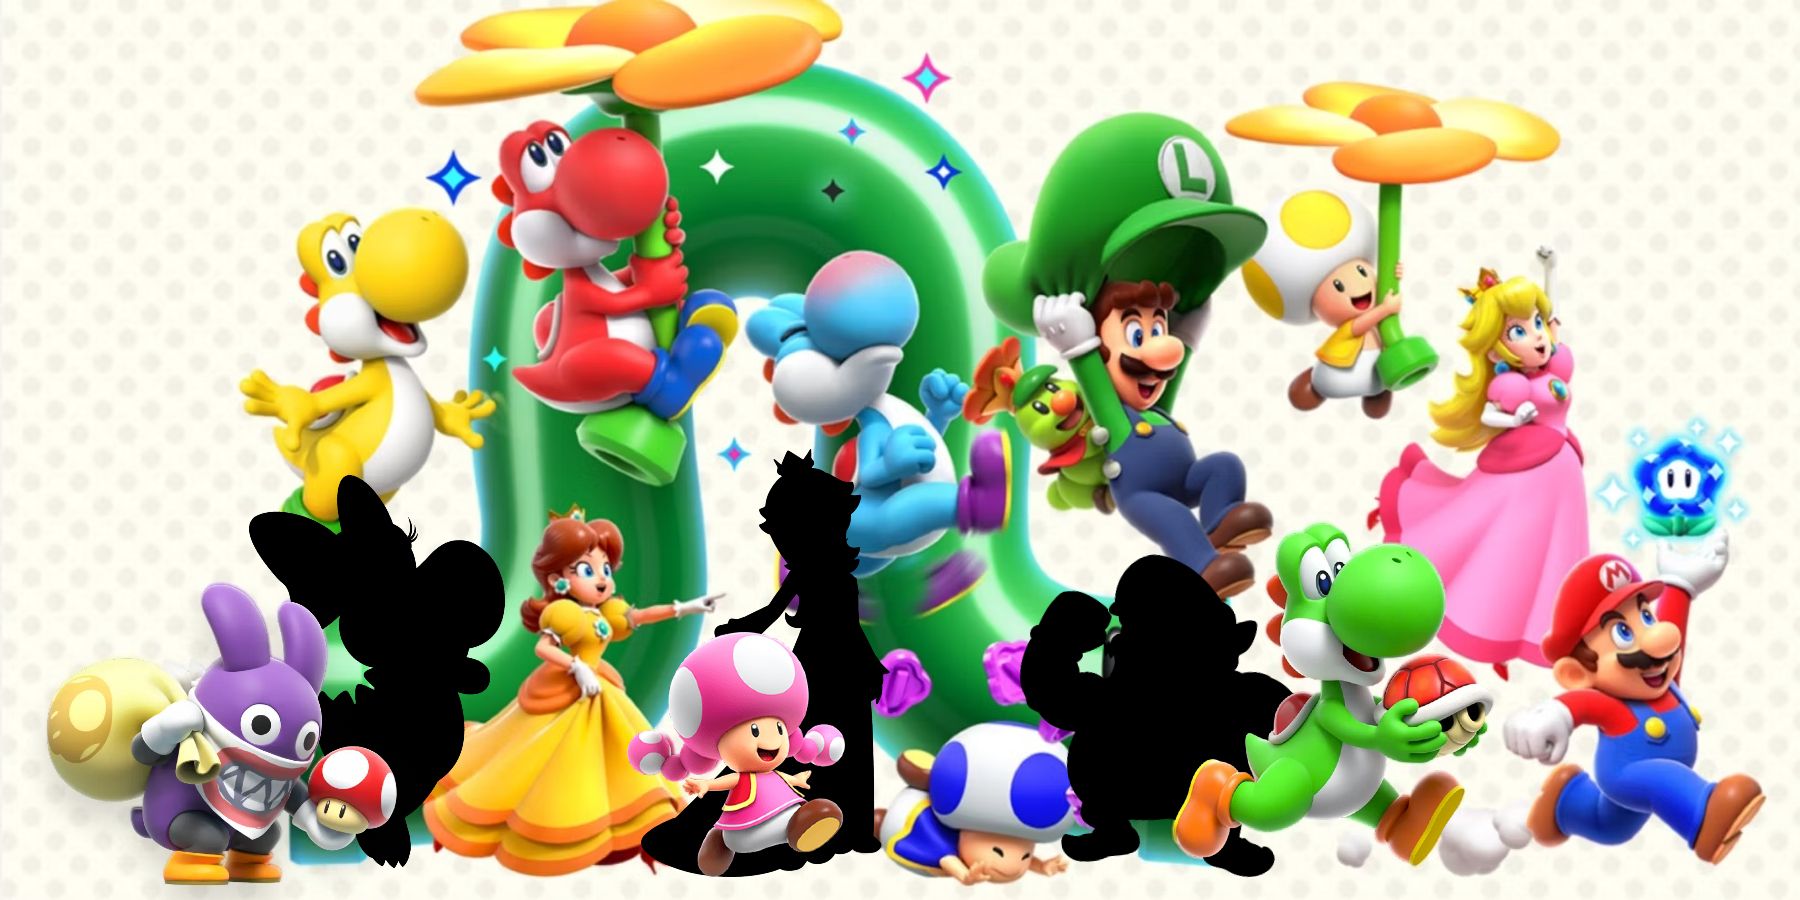 Super Mario Bros. Wonder: All Playable Characters and Villains